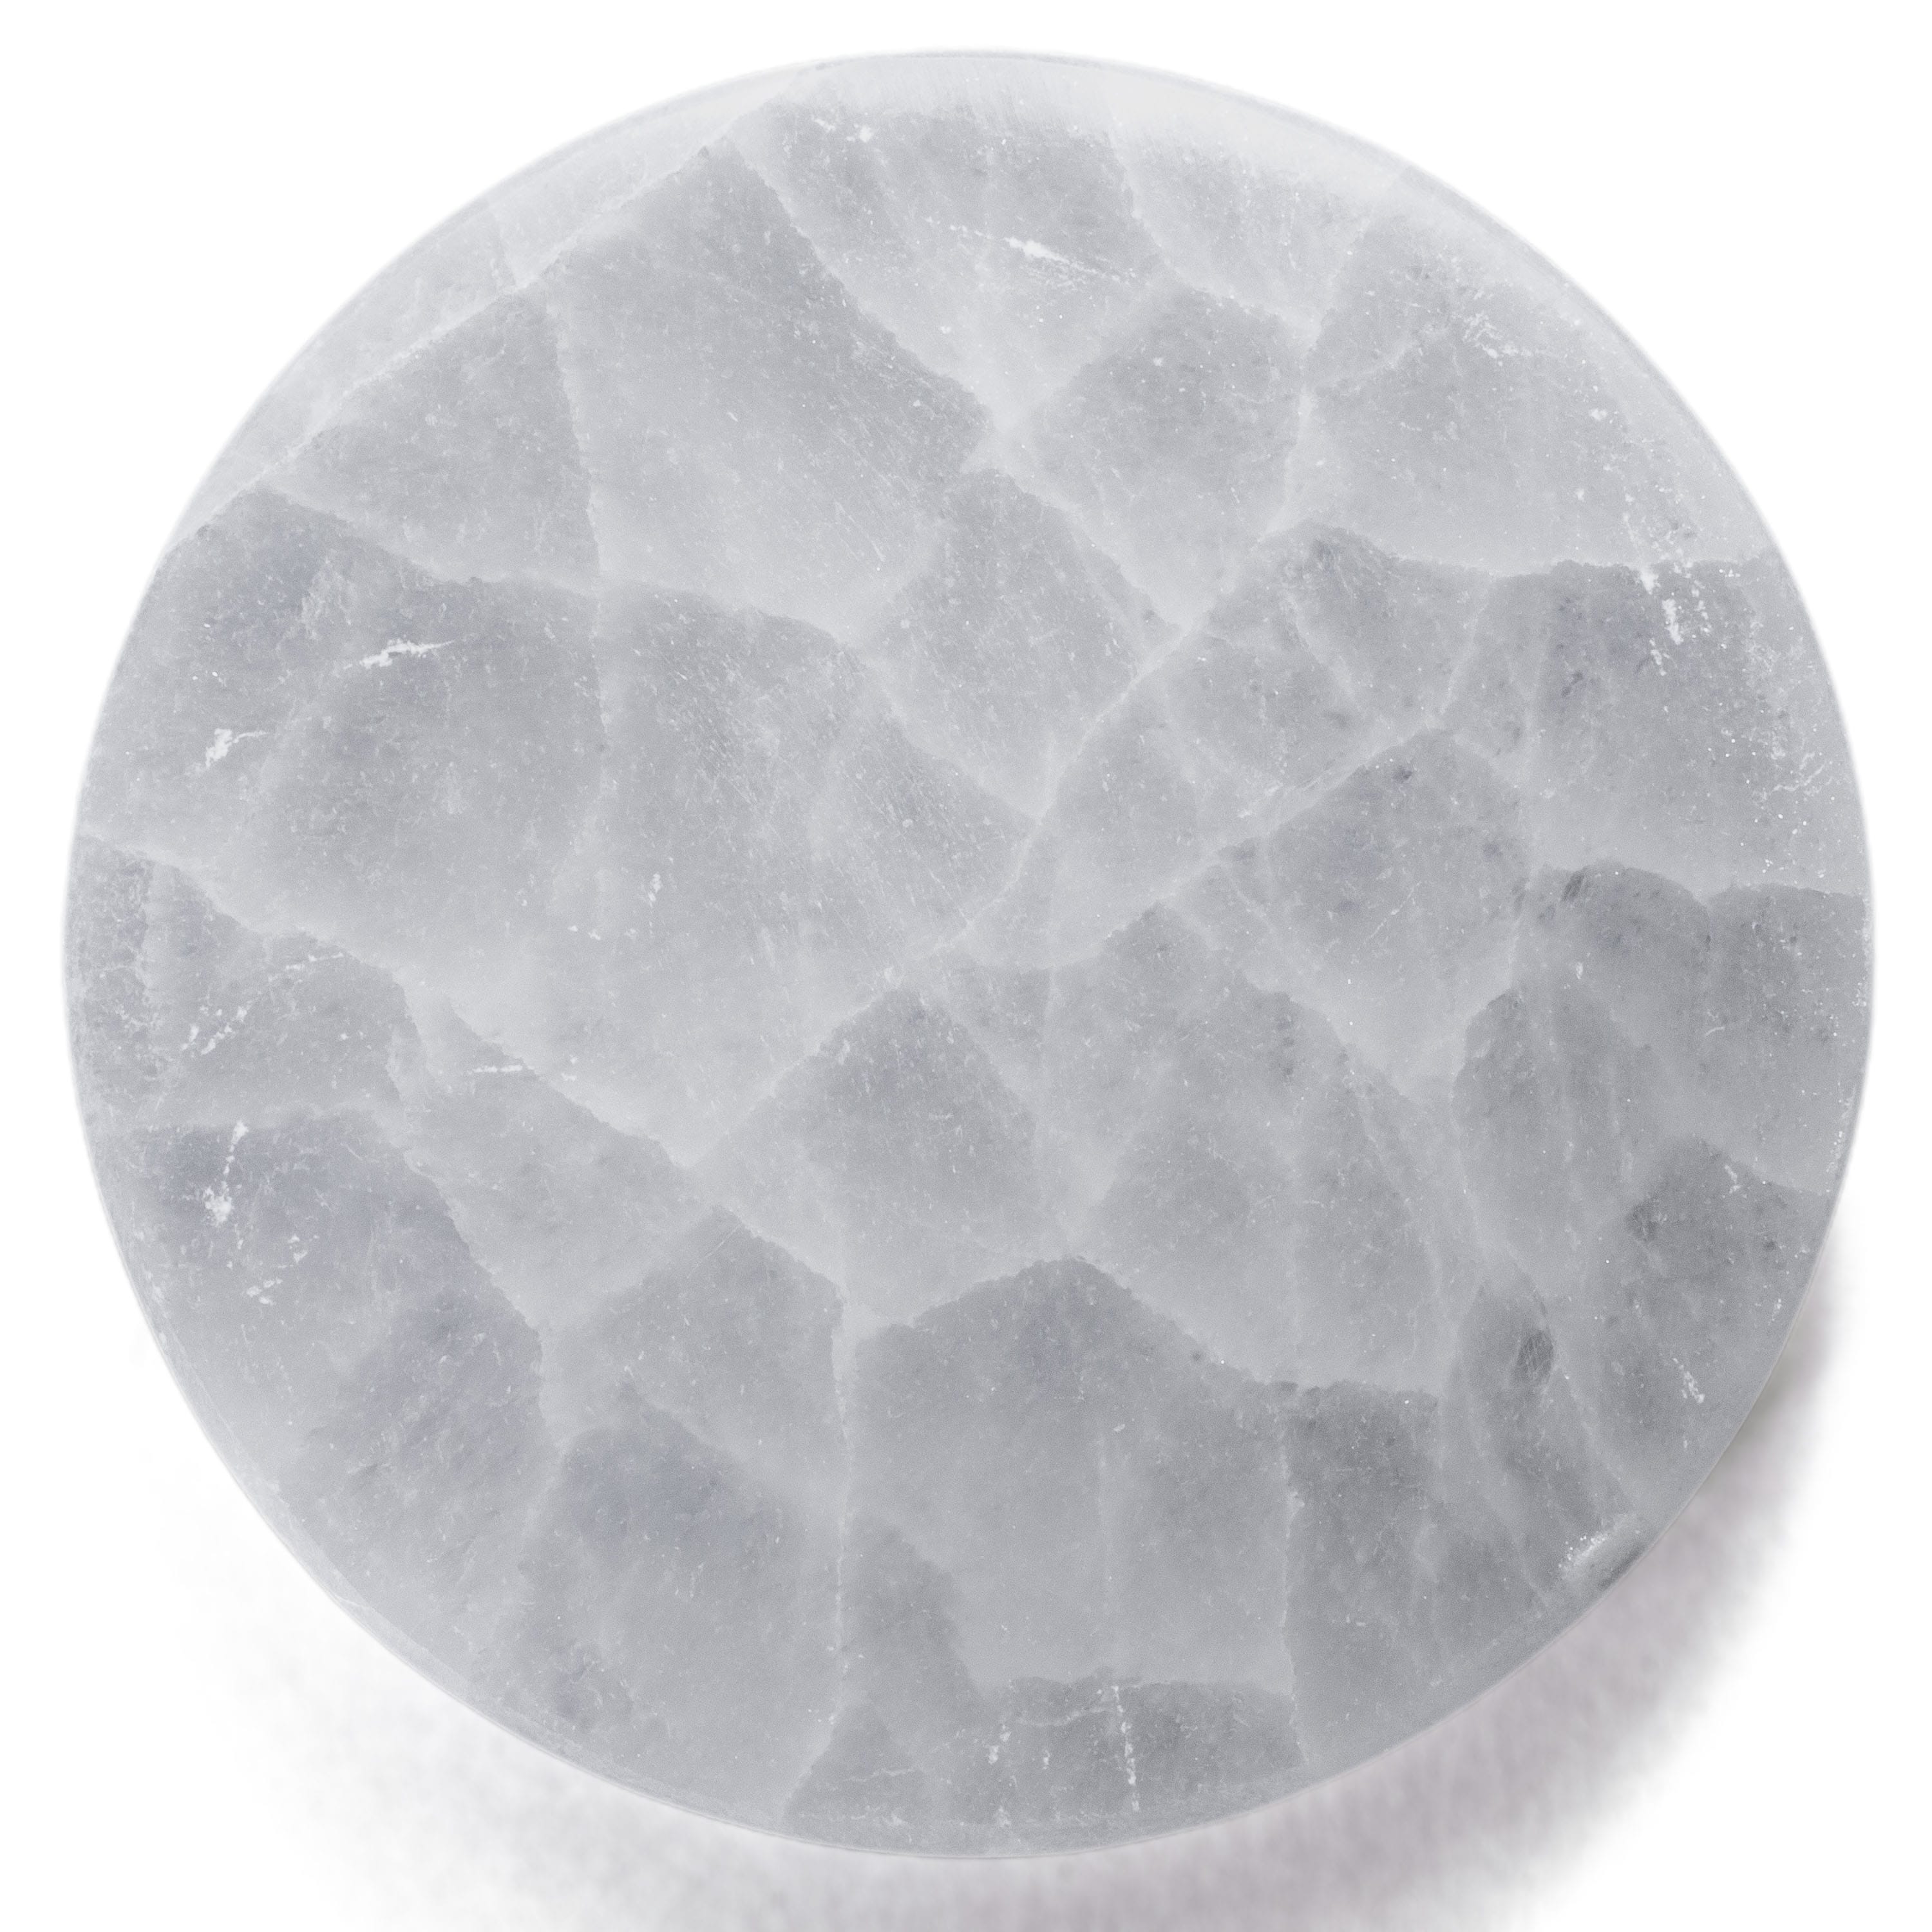 KALIFANO Selenite Selenite Crystal Charging Plate - 3.5 in SCP30